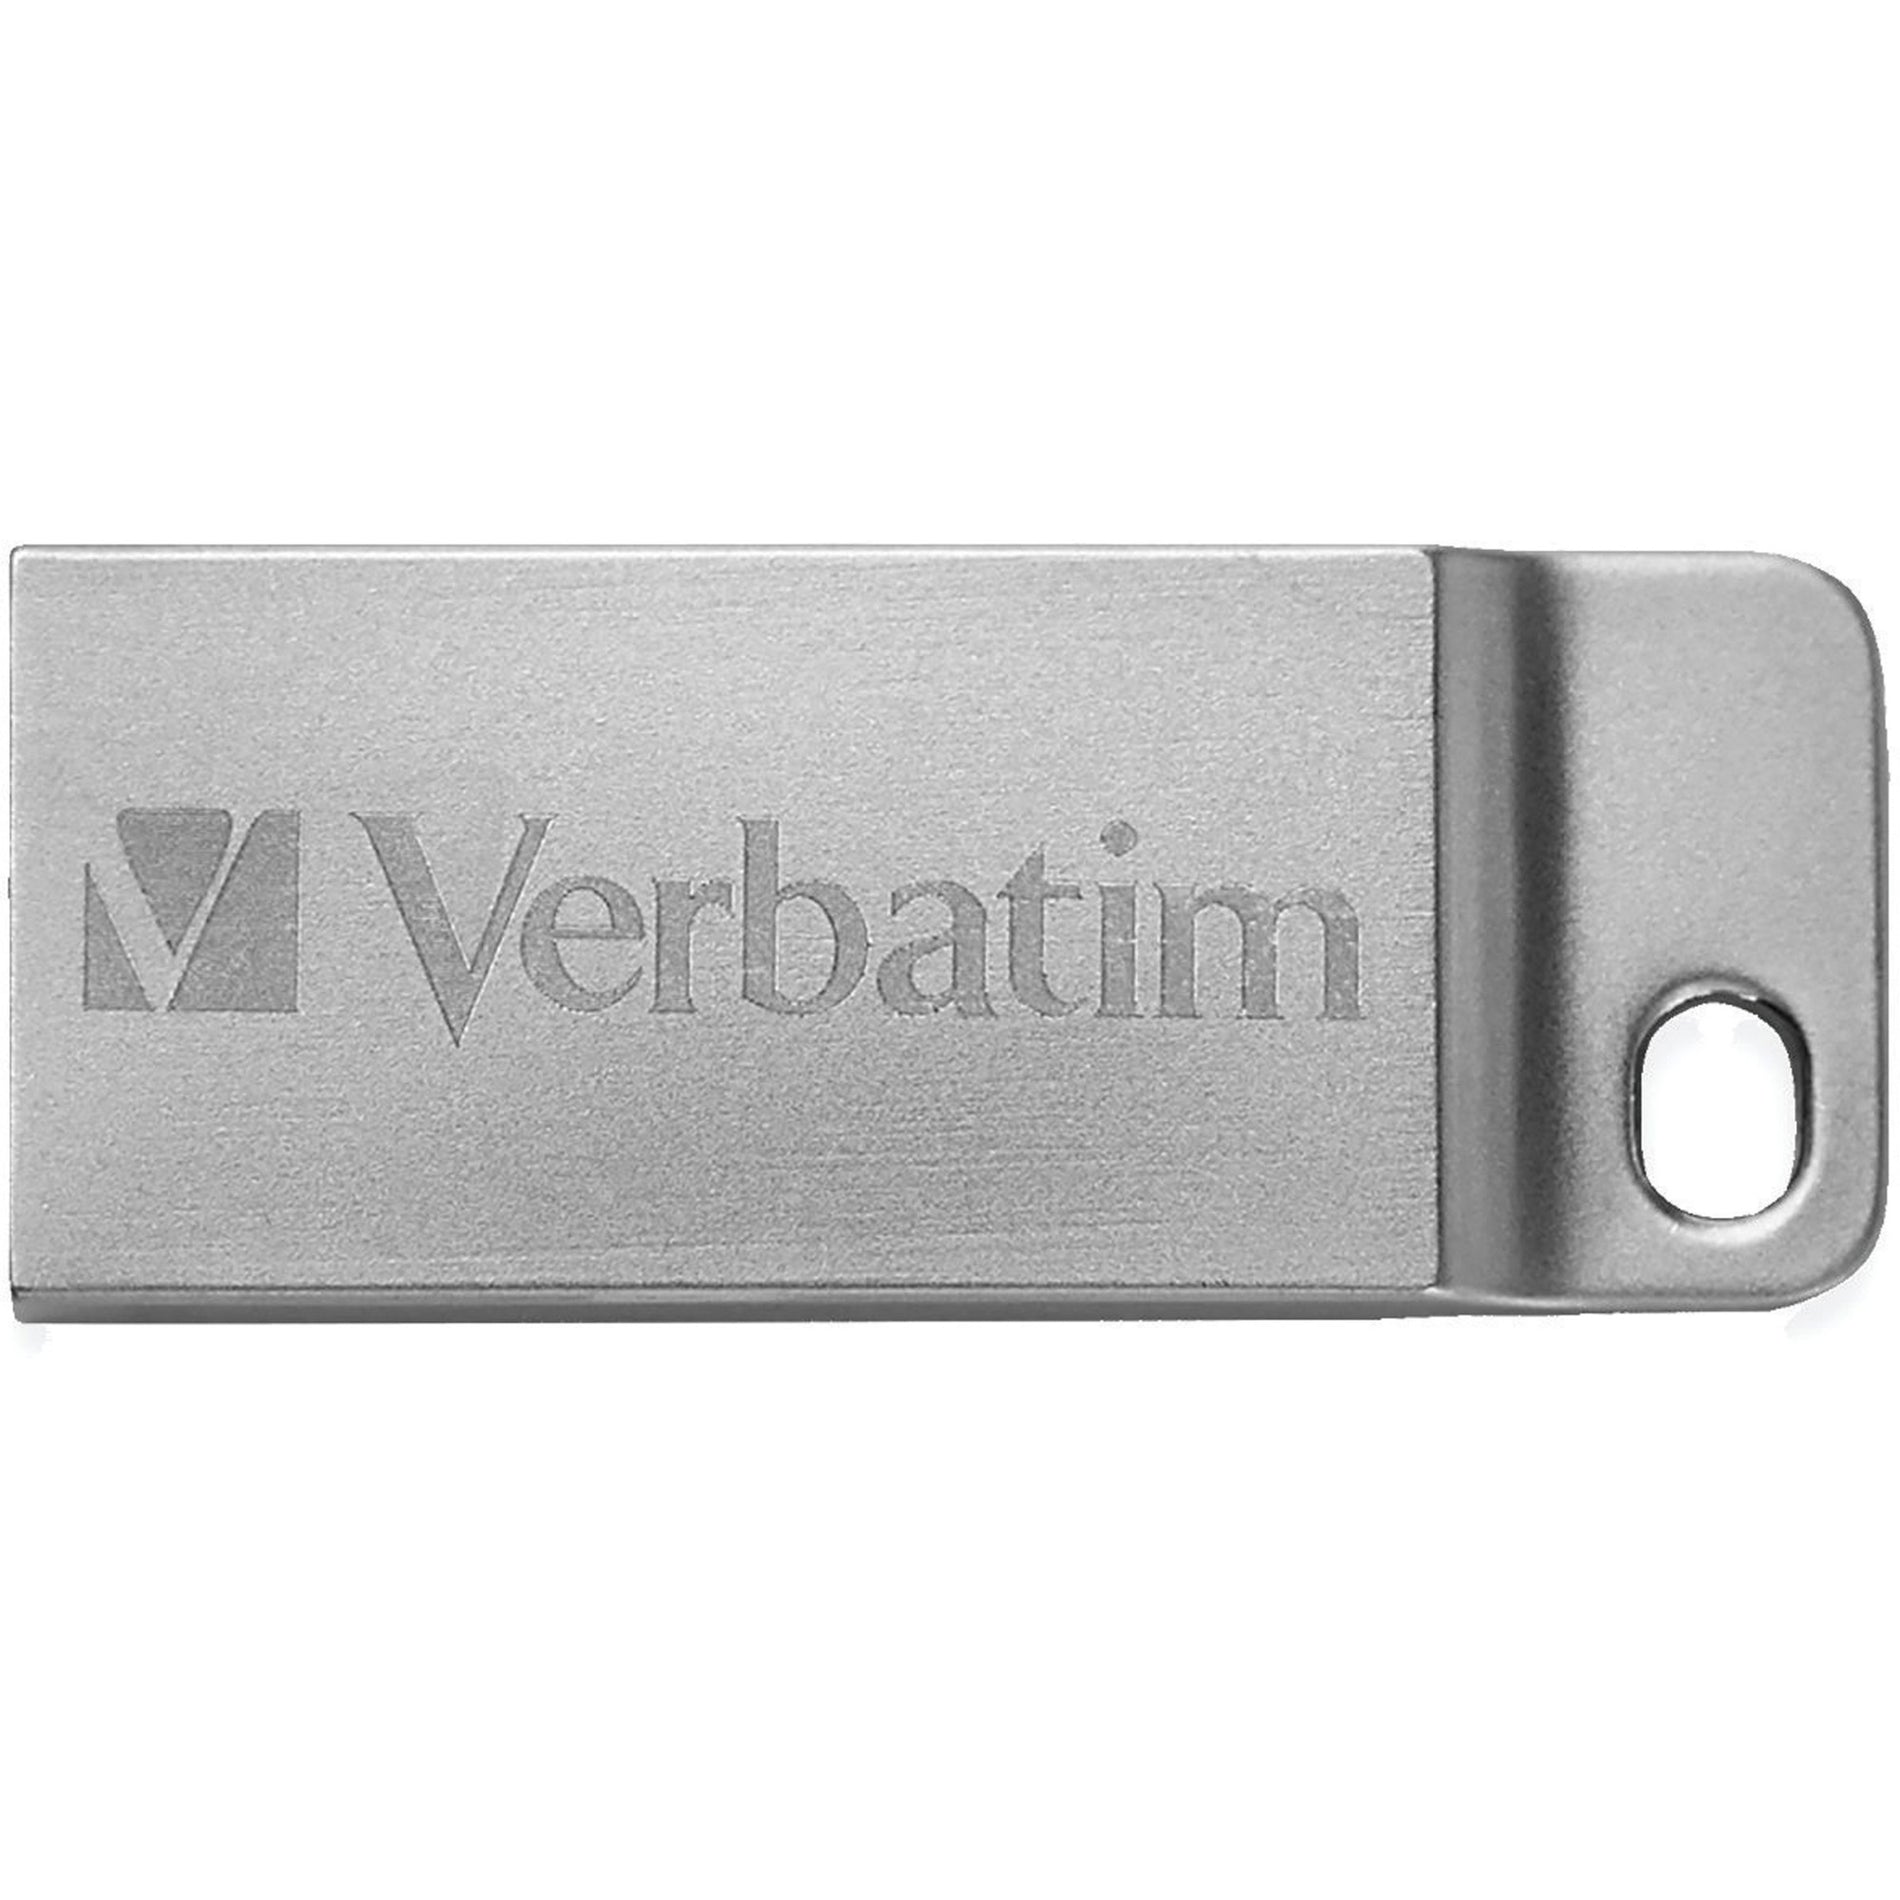 Verbatim 98748 Metal Executive USB Flash Drive - Silver, 16GB Storage Capacity